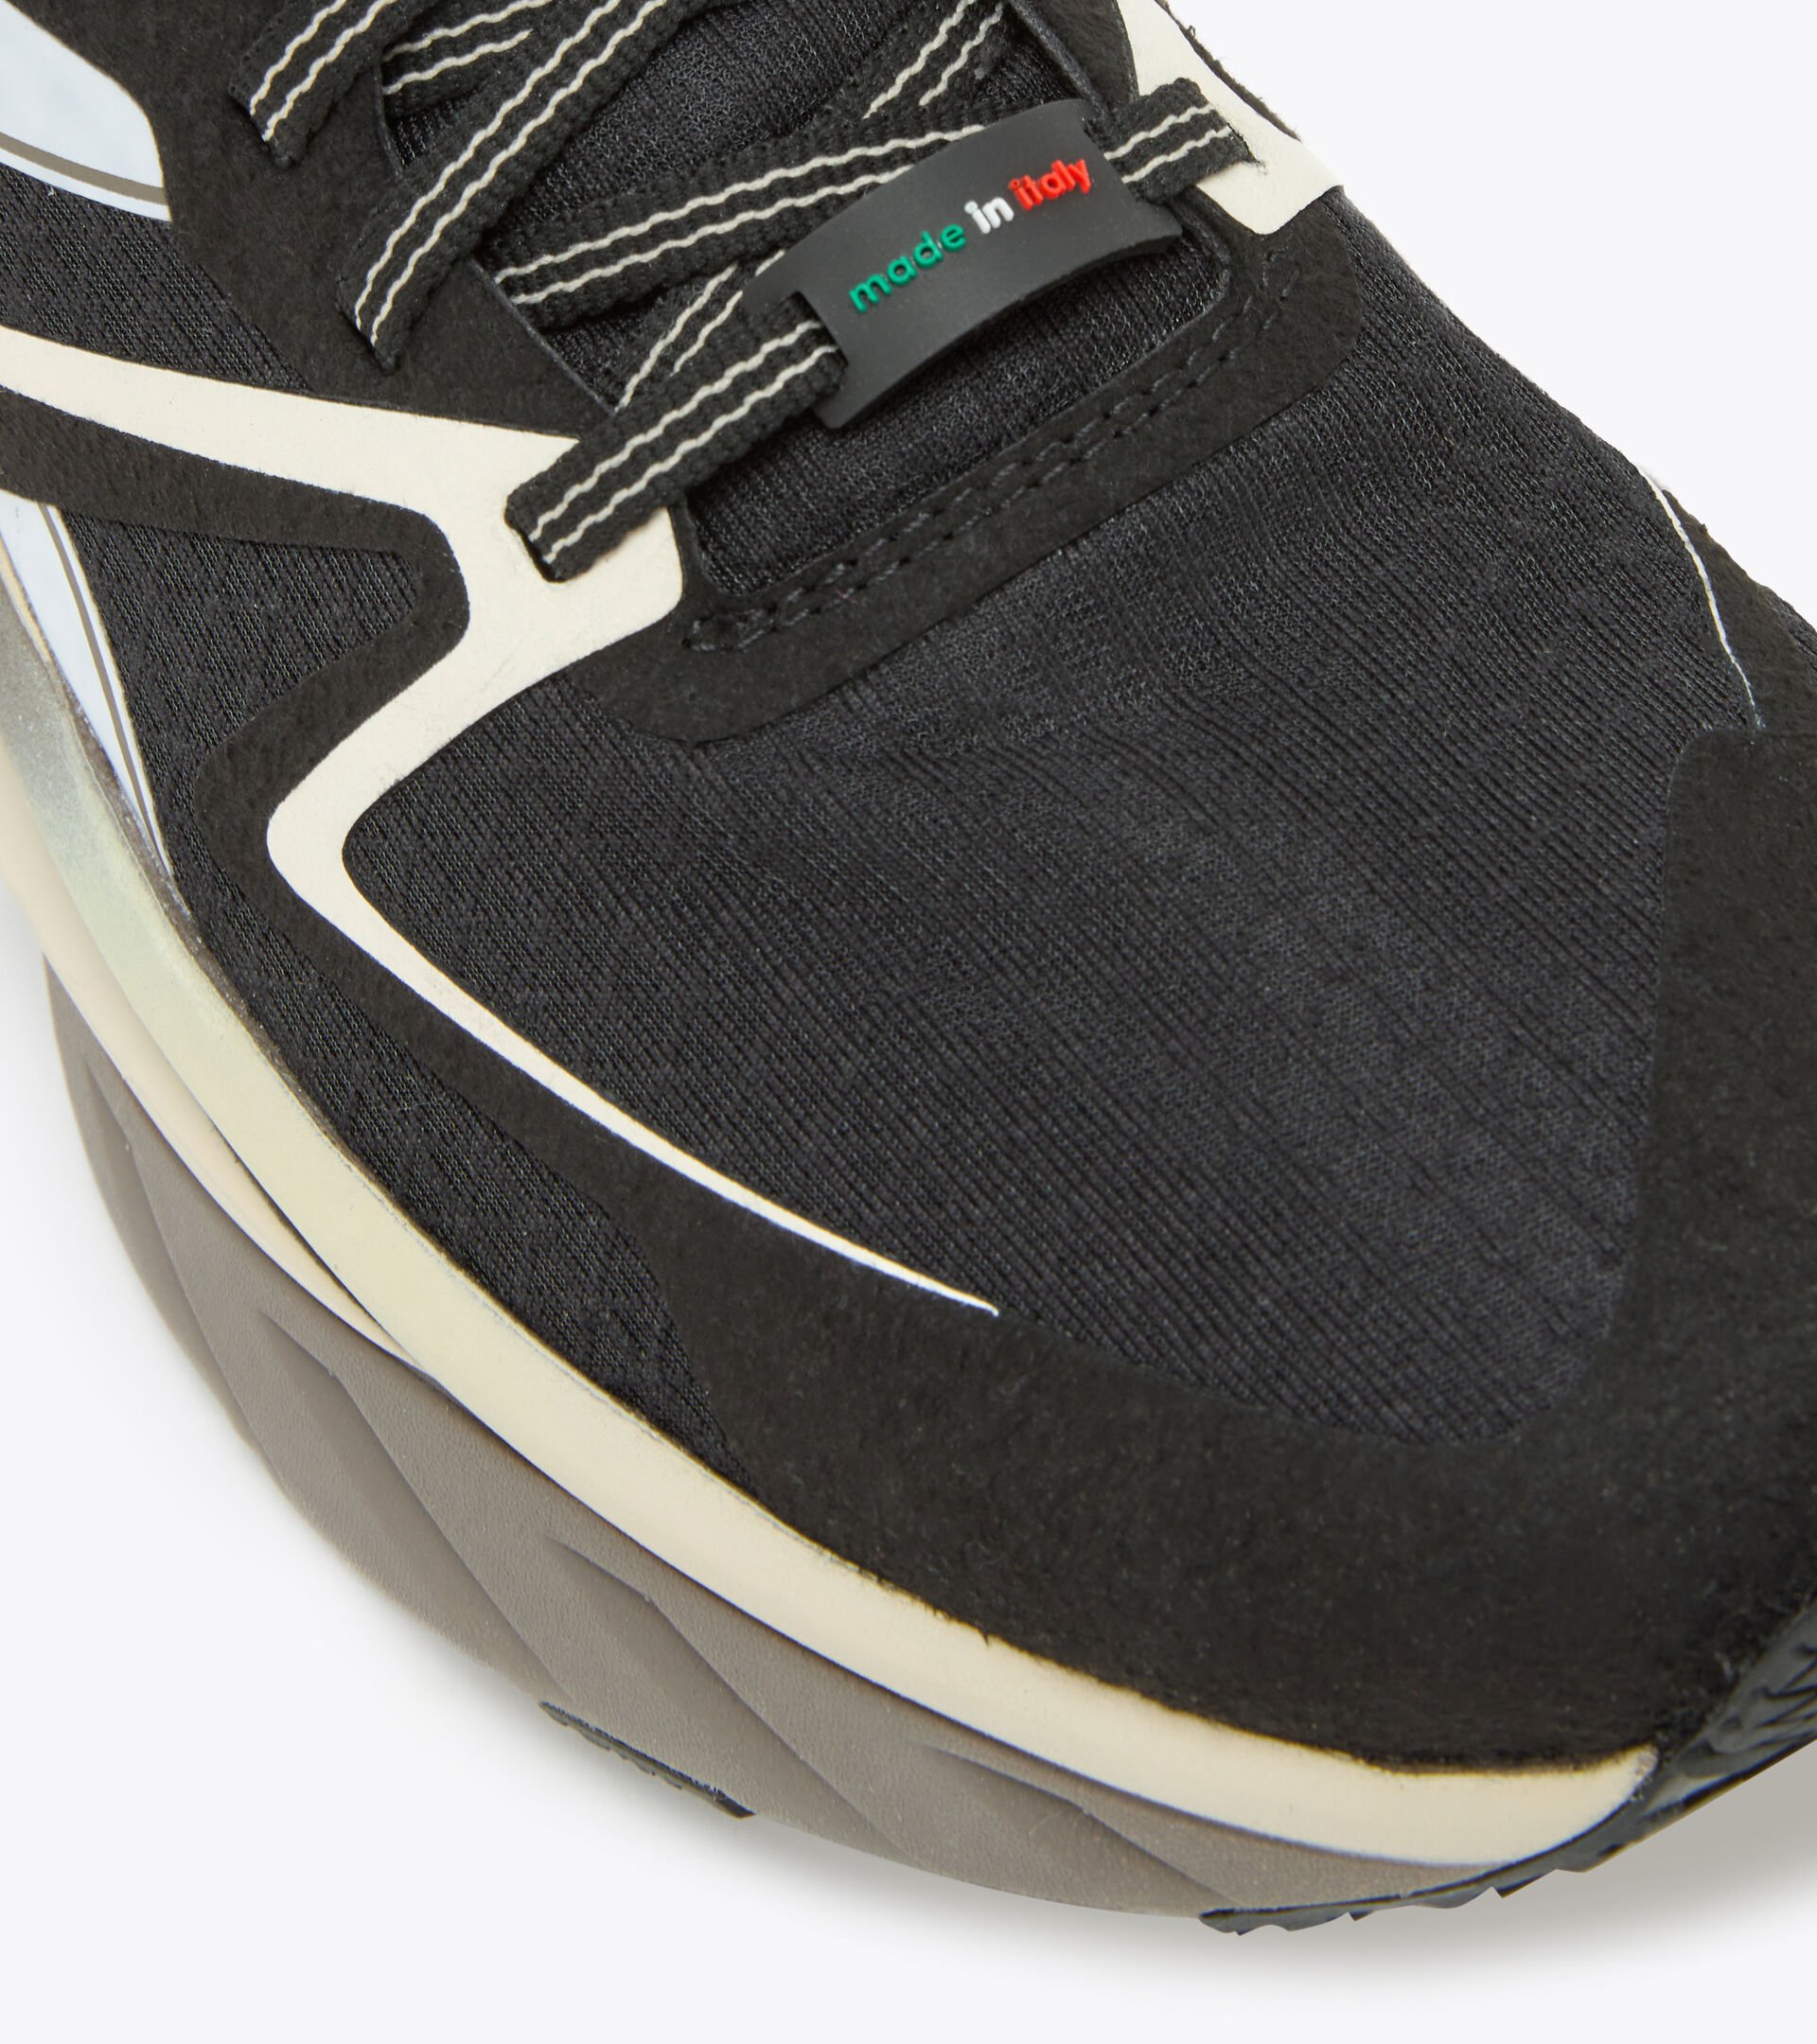 Chaussures de running Made in Italy - Gender neutral ATOMO V7000 BLACK/WHITE/SMOKE GRAY - Diadora